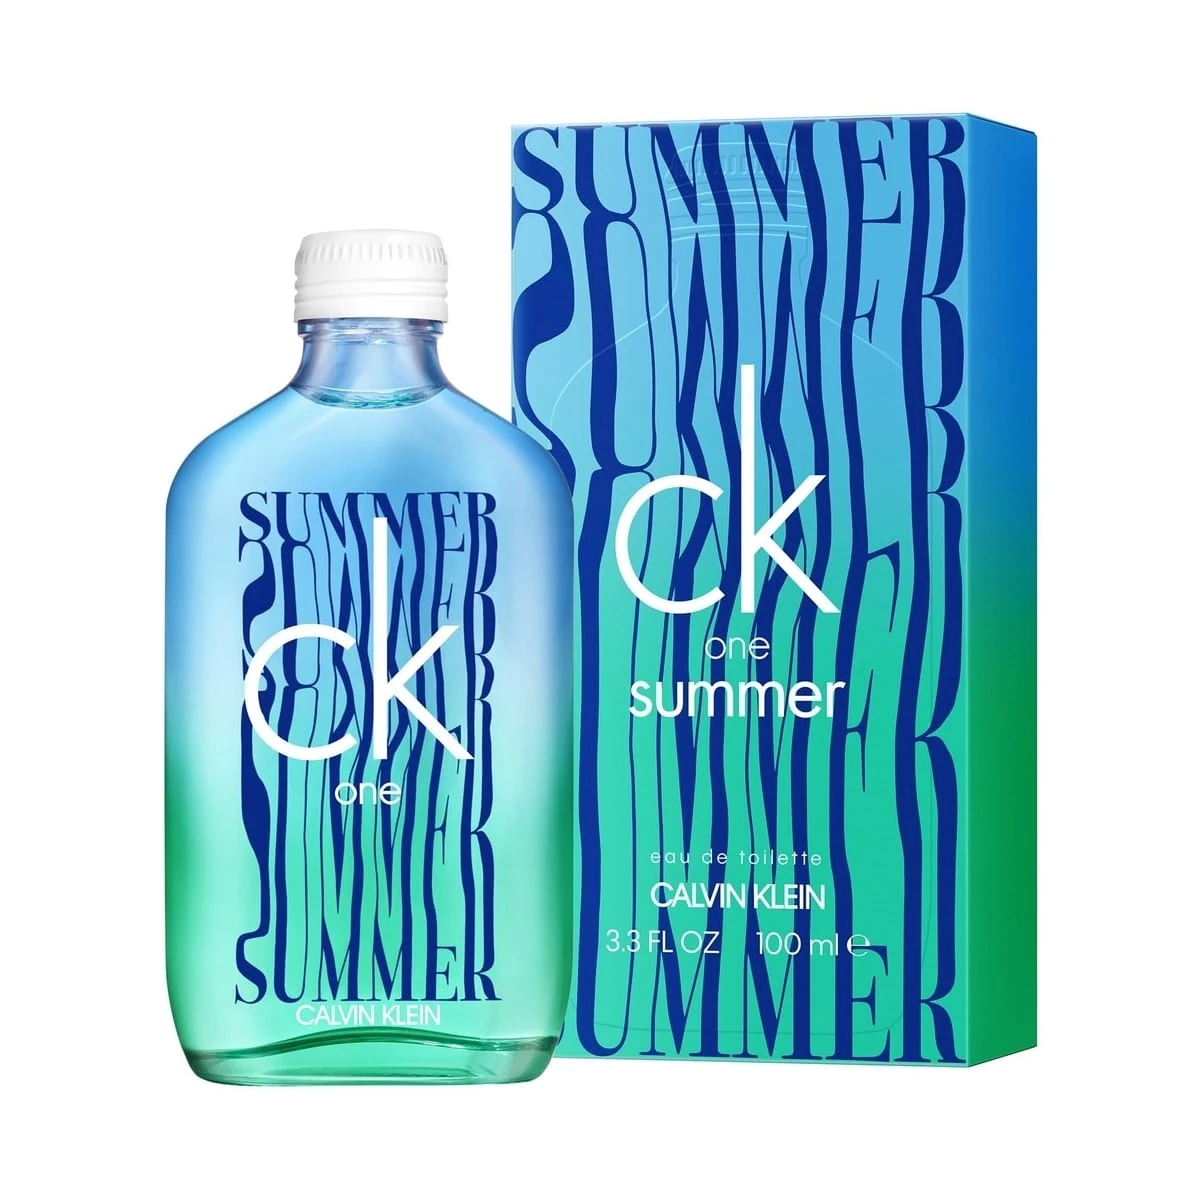 CK One Summer de Calvin Klein Eau de Toilette Incenza